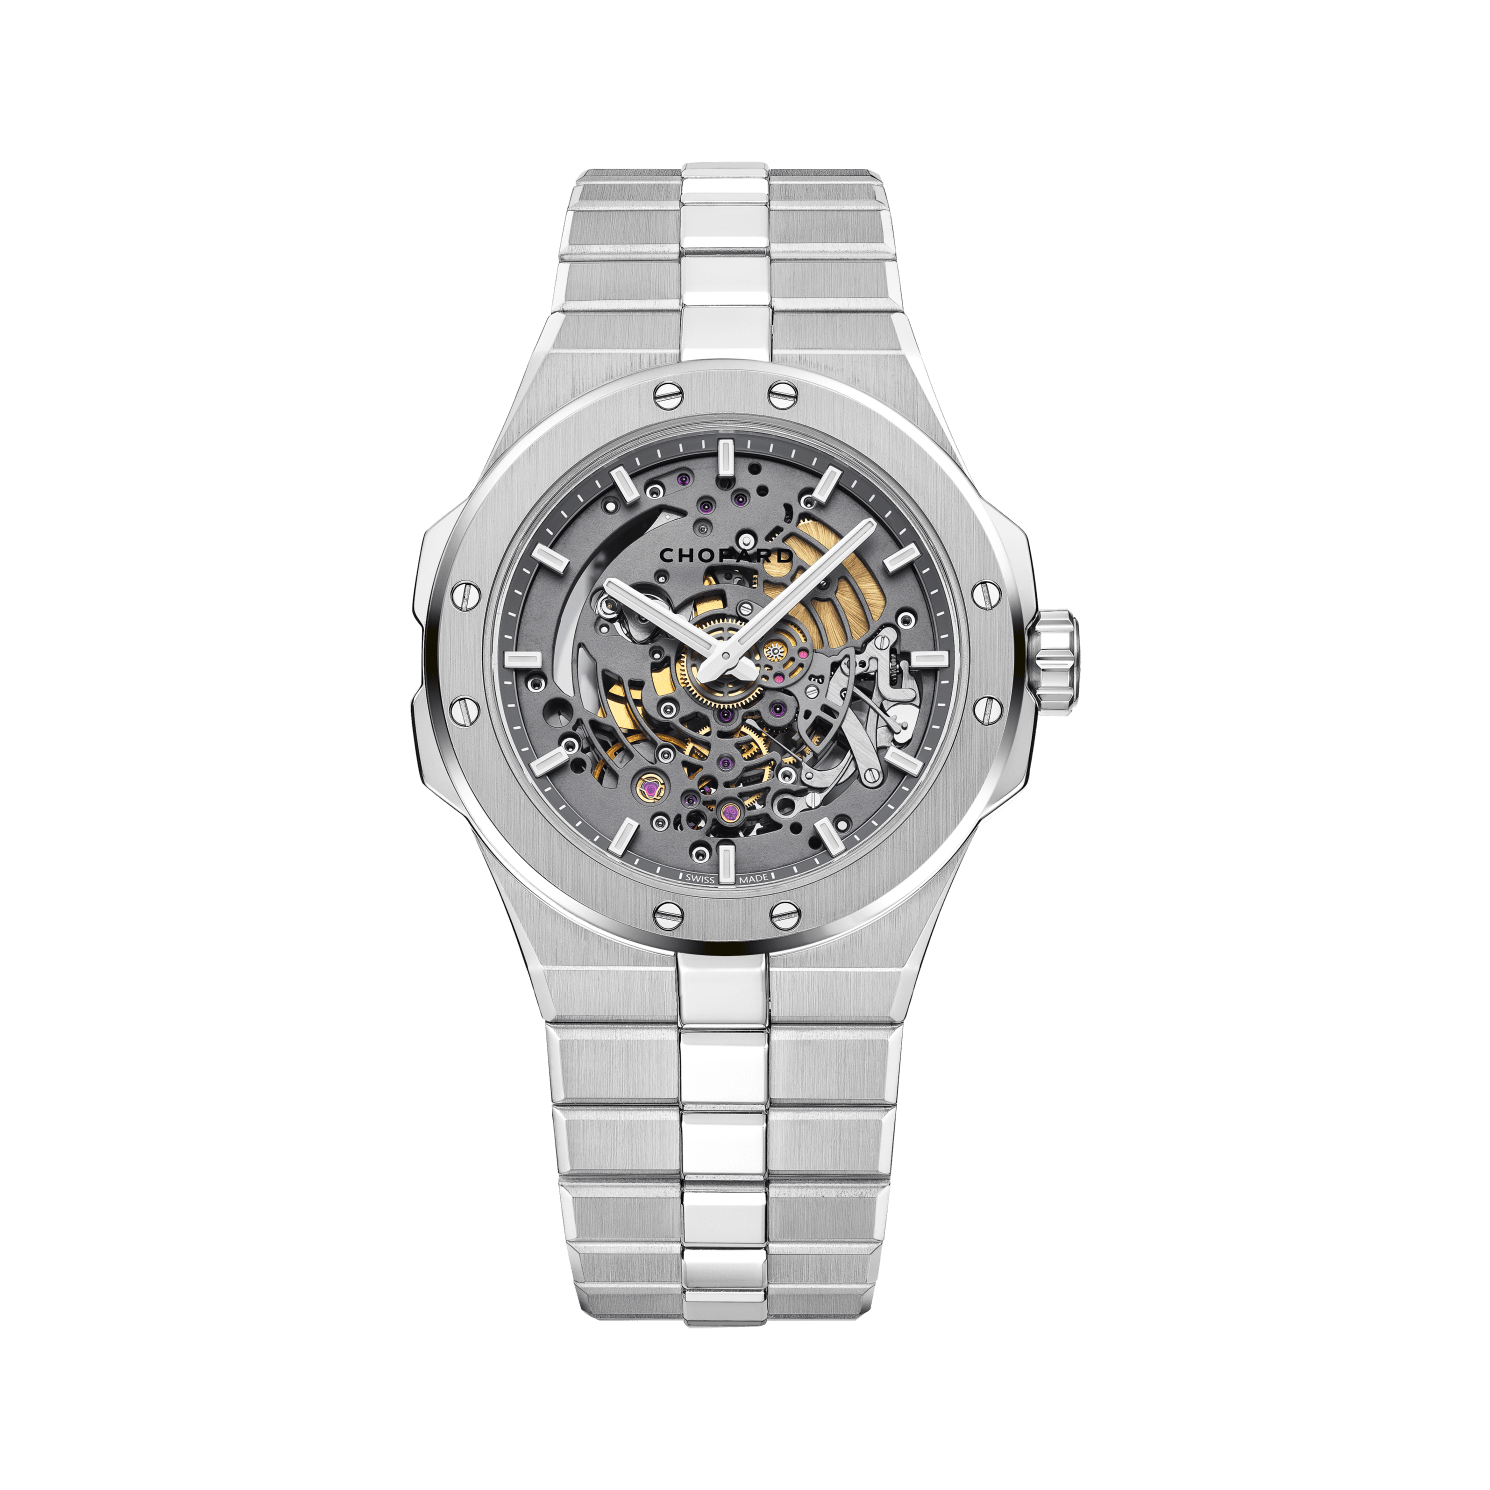 Reloj chopard alpine eagle 41 xp tt